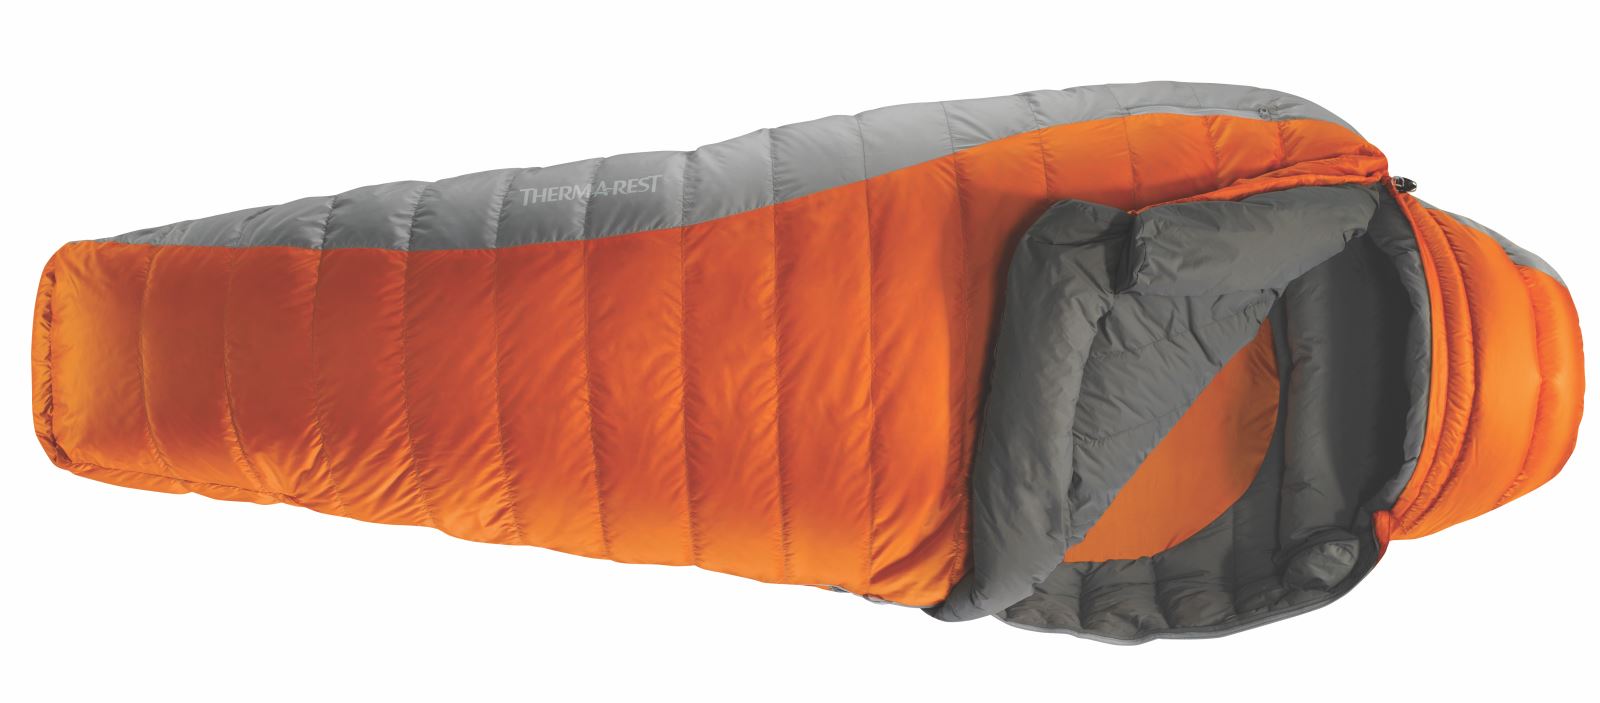 Wild camping sleeping bags